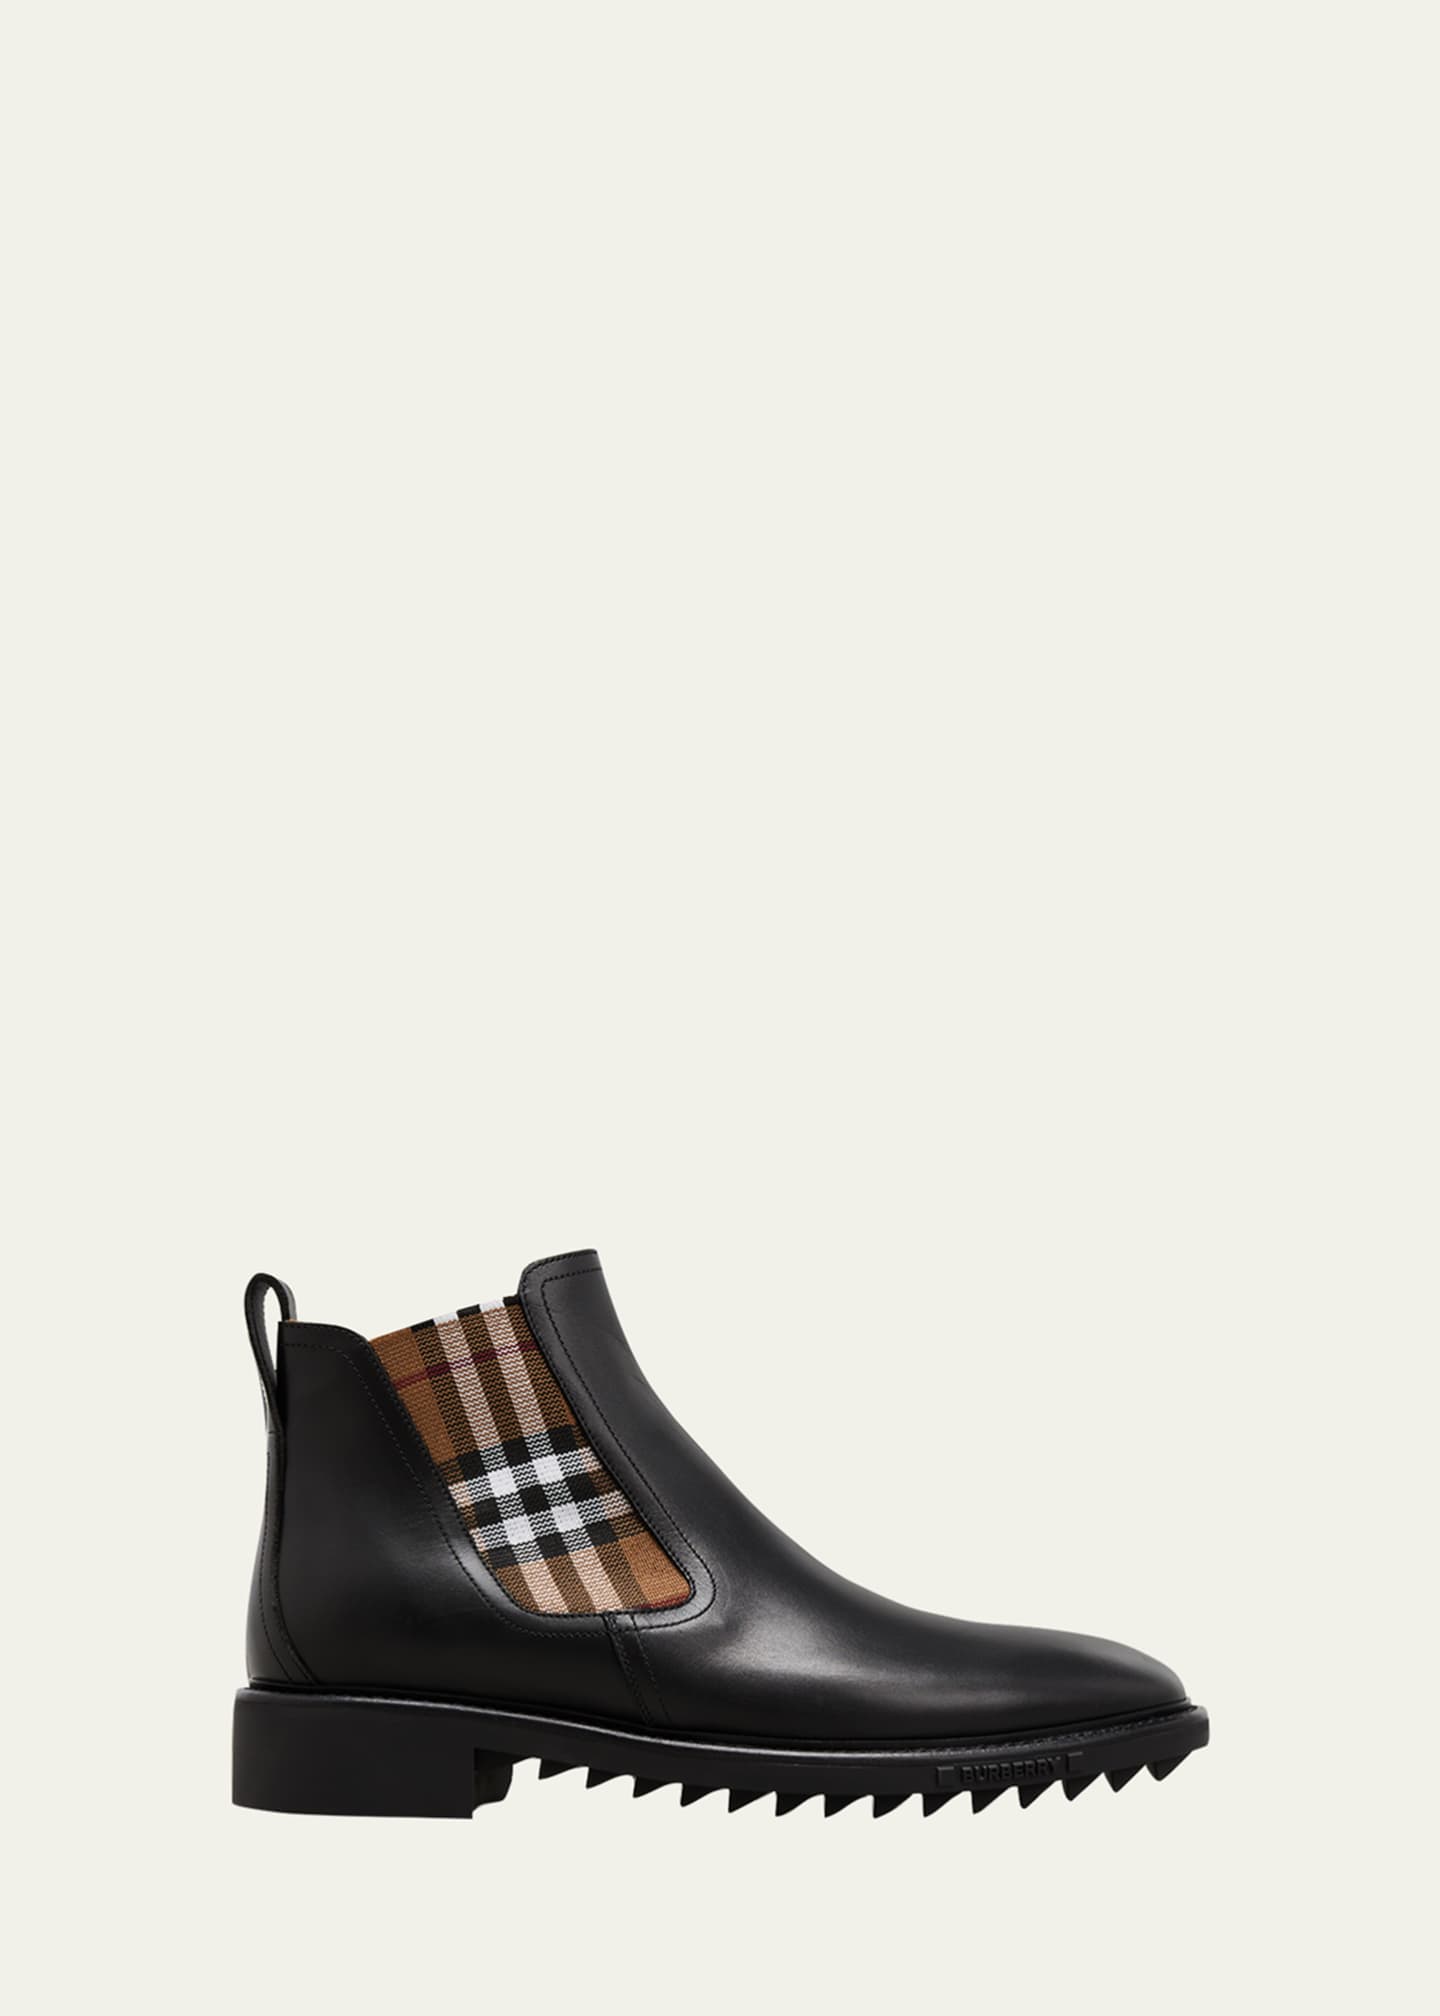 Bunke af Vågn op systematisk Burberry Men's Check-Print Leather Chelsea Boots - Bergdorf Goodman